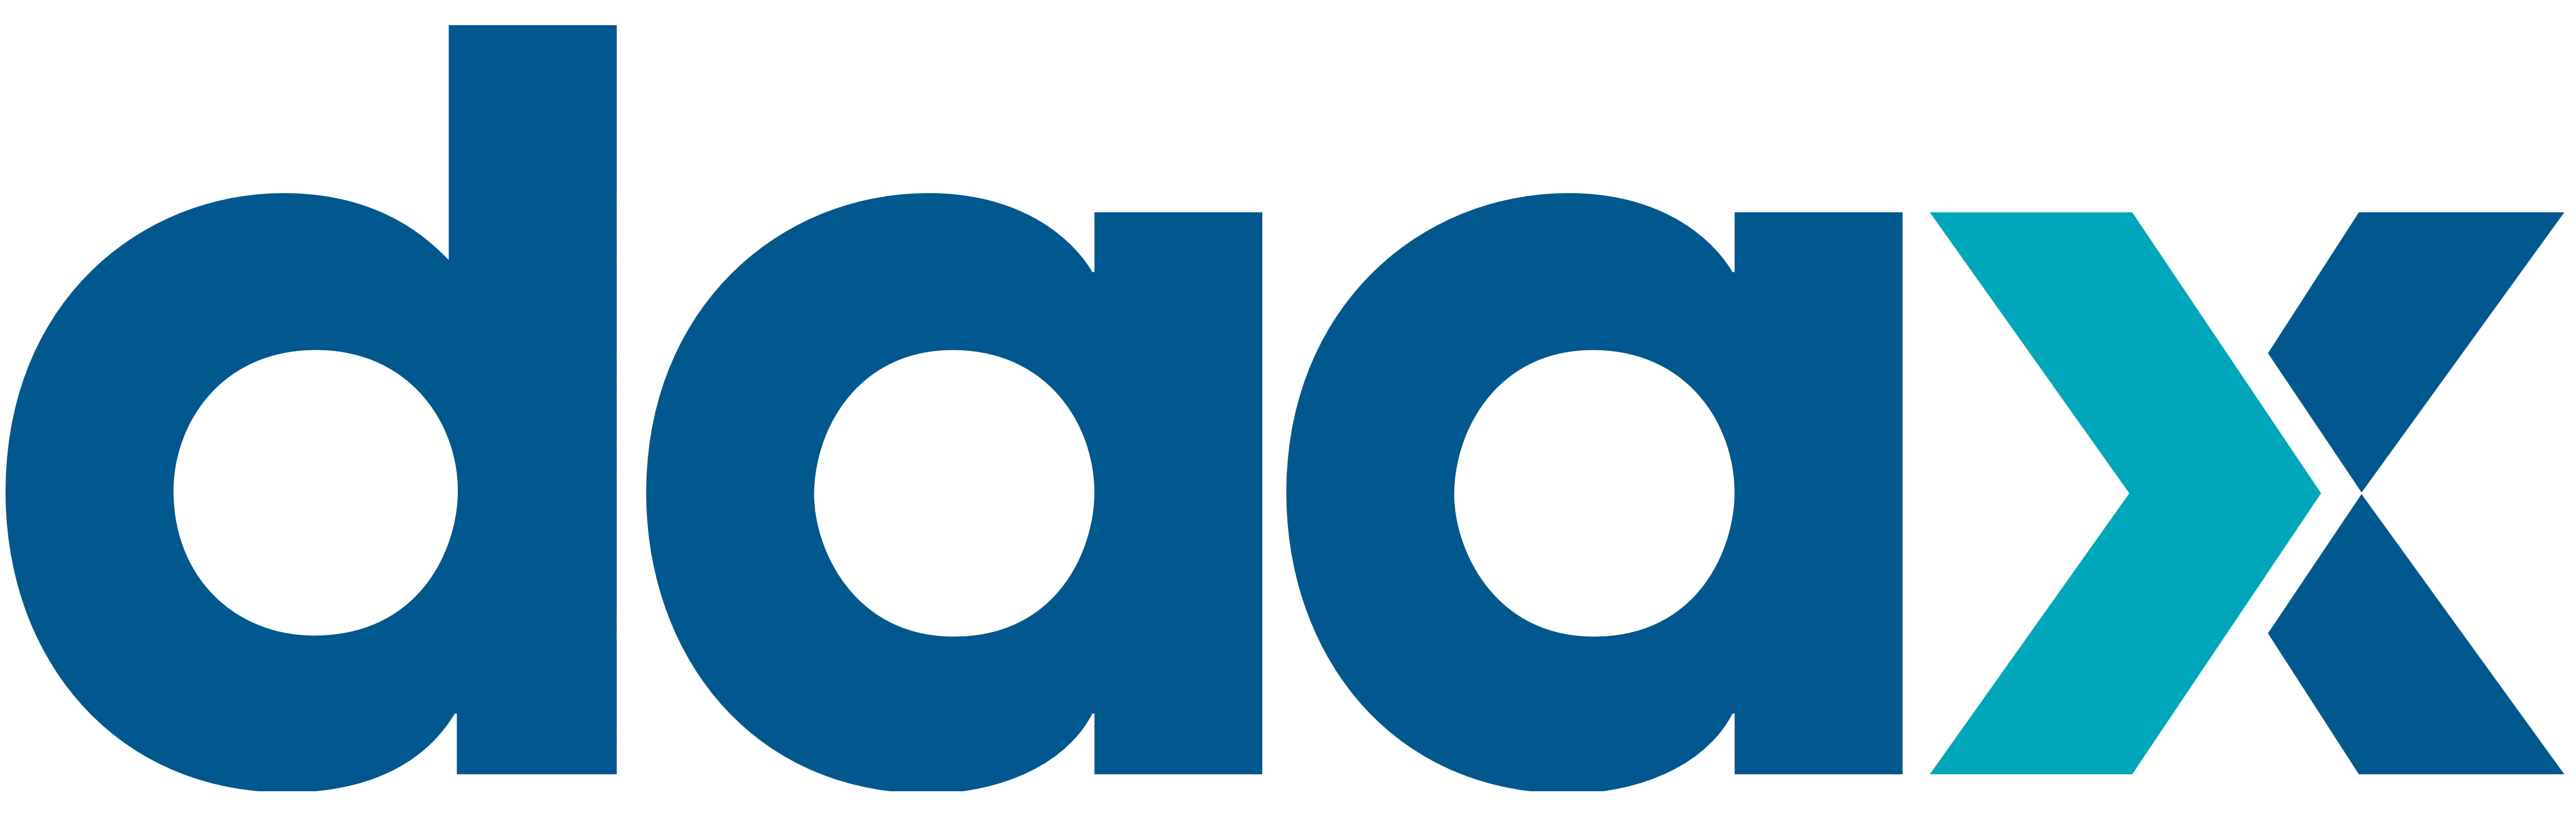 Daax logo, logotype